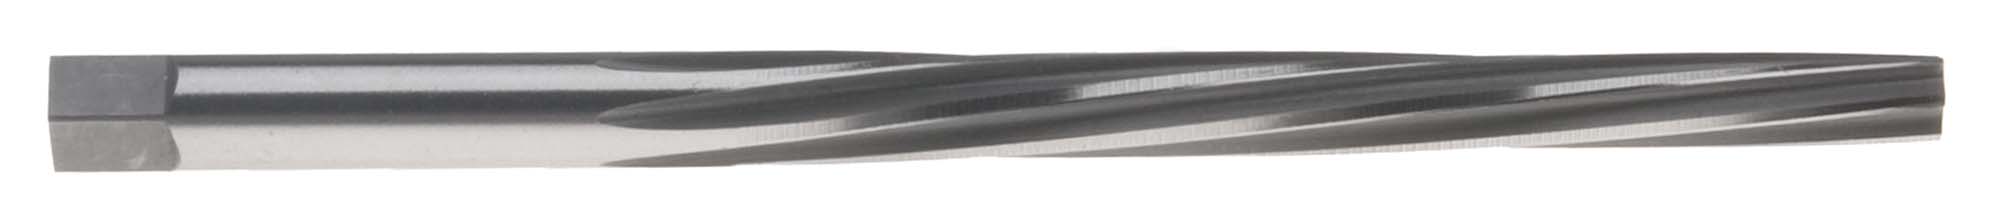 #2/0 Spiral Flute Taper Pin Reamer, High Speed Steel